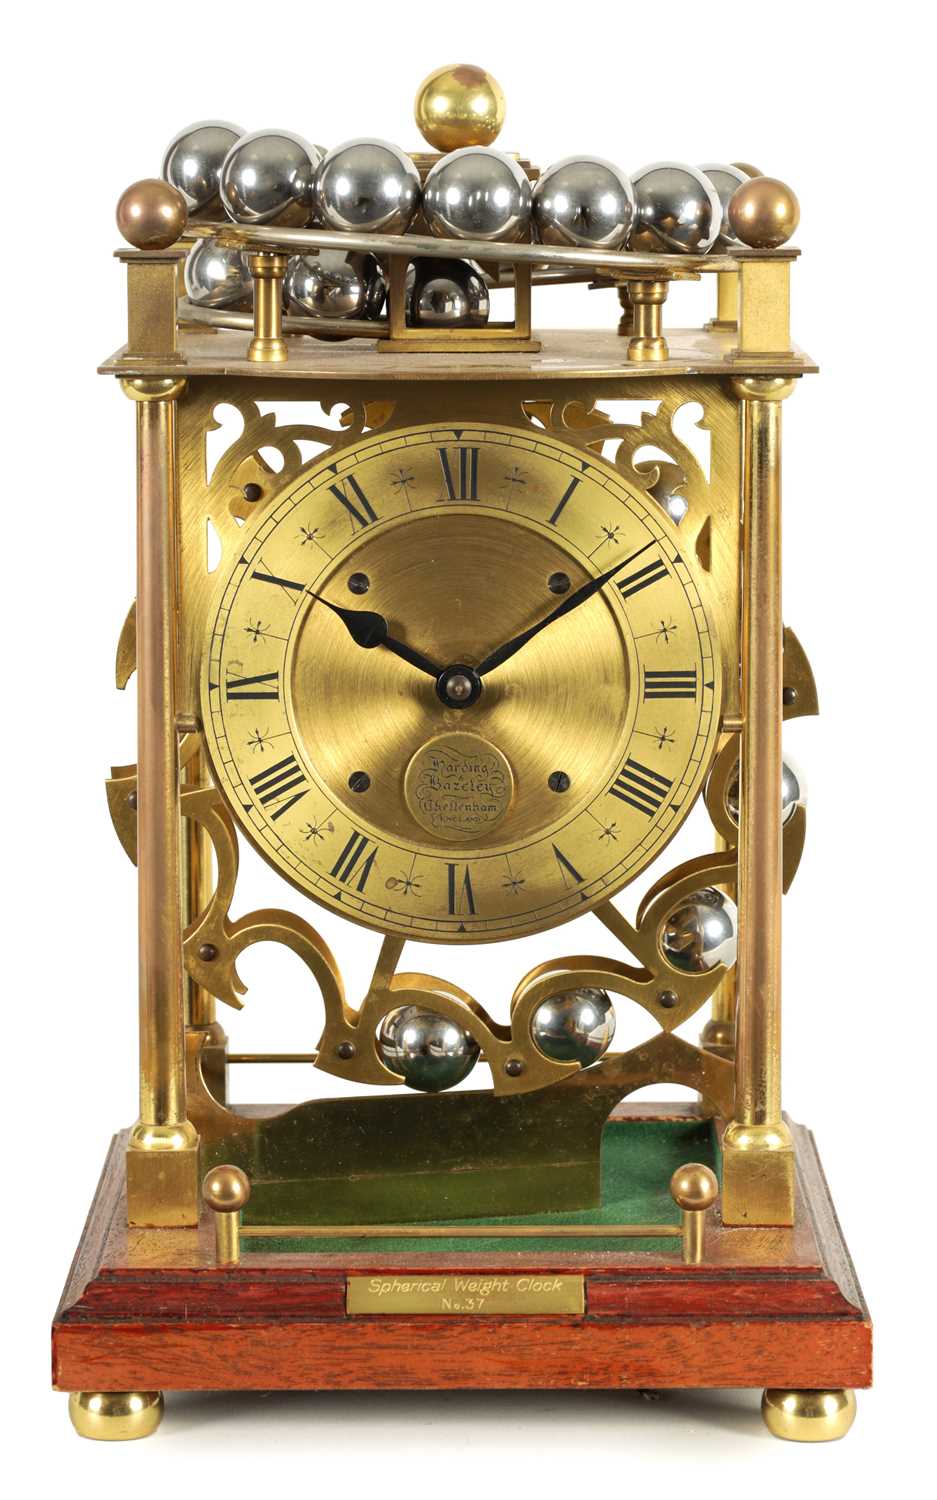 HARDING & BAZELEY, CHELTENHAM. A 20TH CENTURY LIMITED EDITION SPHERICAL BALL CLOCK